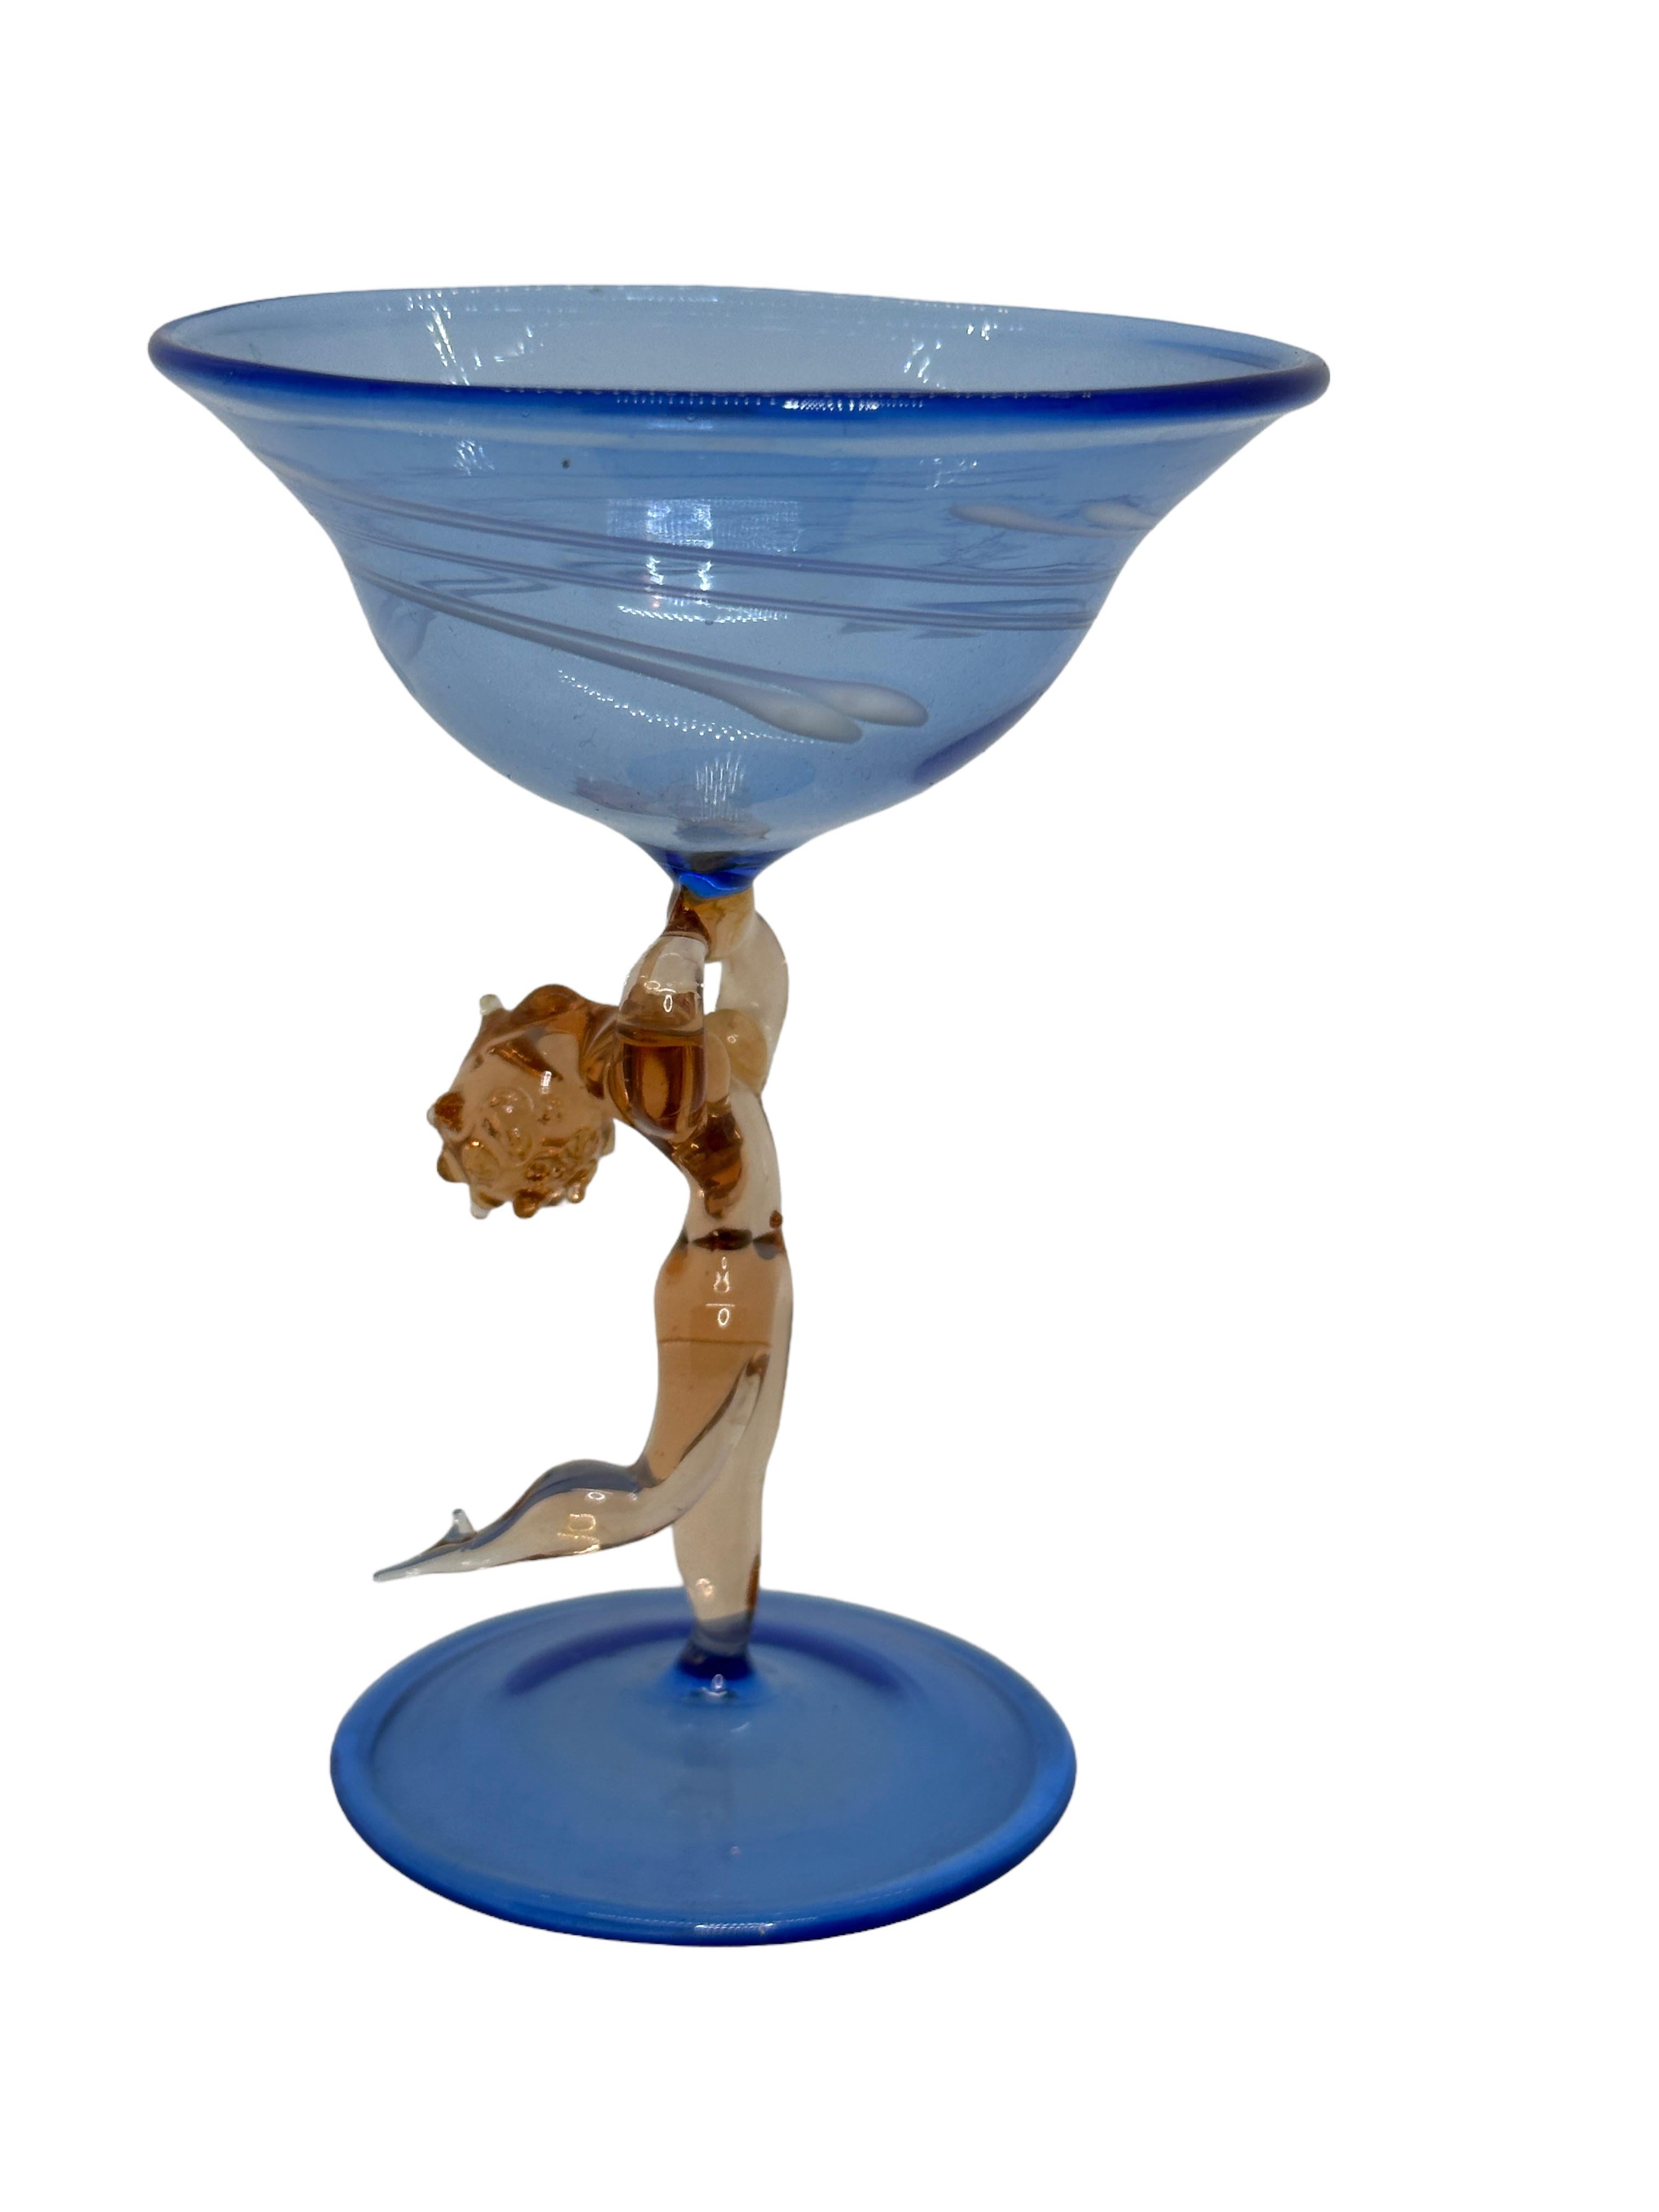 Art Deco Beautiful Stemware Cocktail Glass, Nude Lady Stem, Bimini Art Vintage Austria For Sale